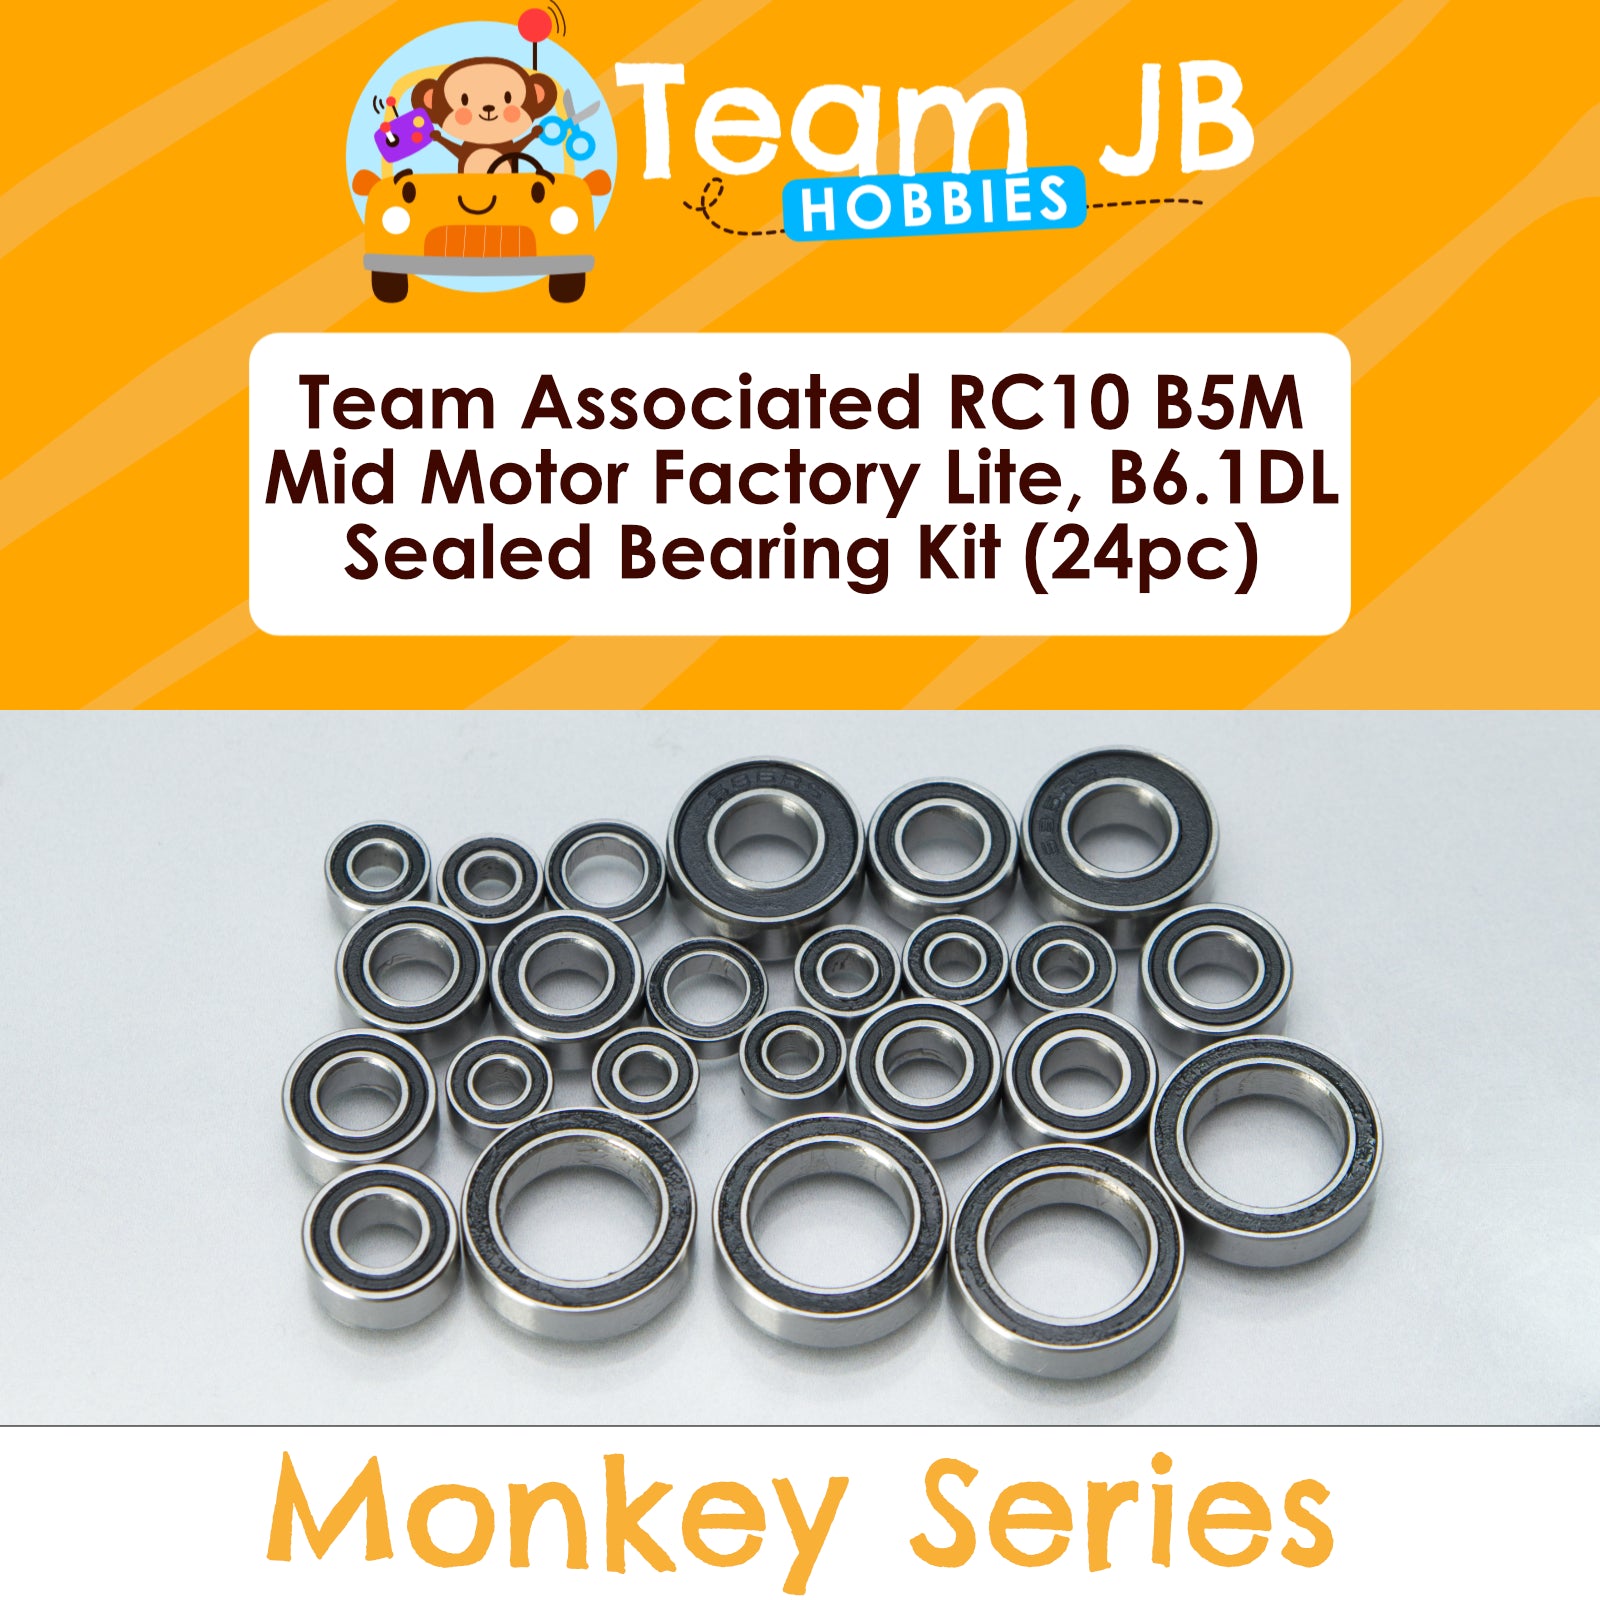 Team Associated RC10 B5M Mid Motor Factory Lite, B6.1DL, B6D - Sealed Bearing Kit